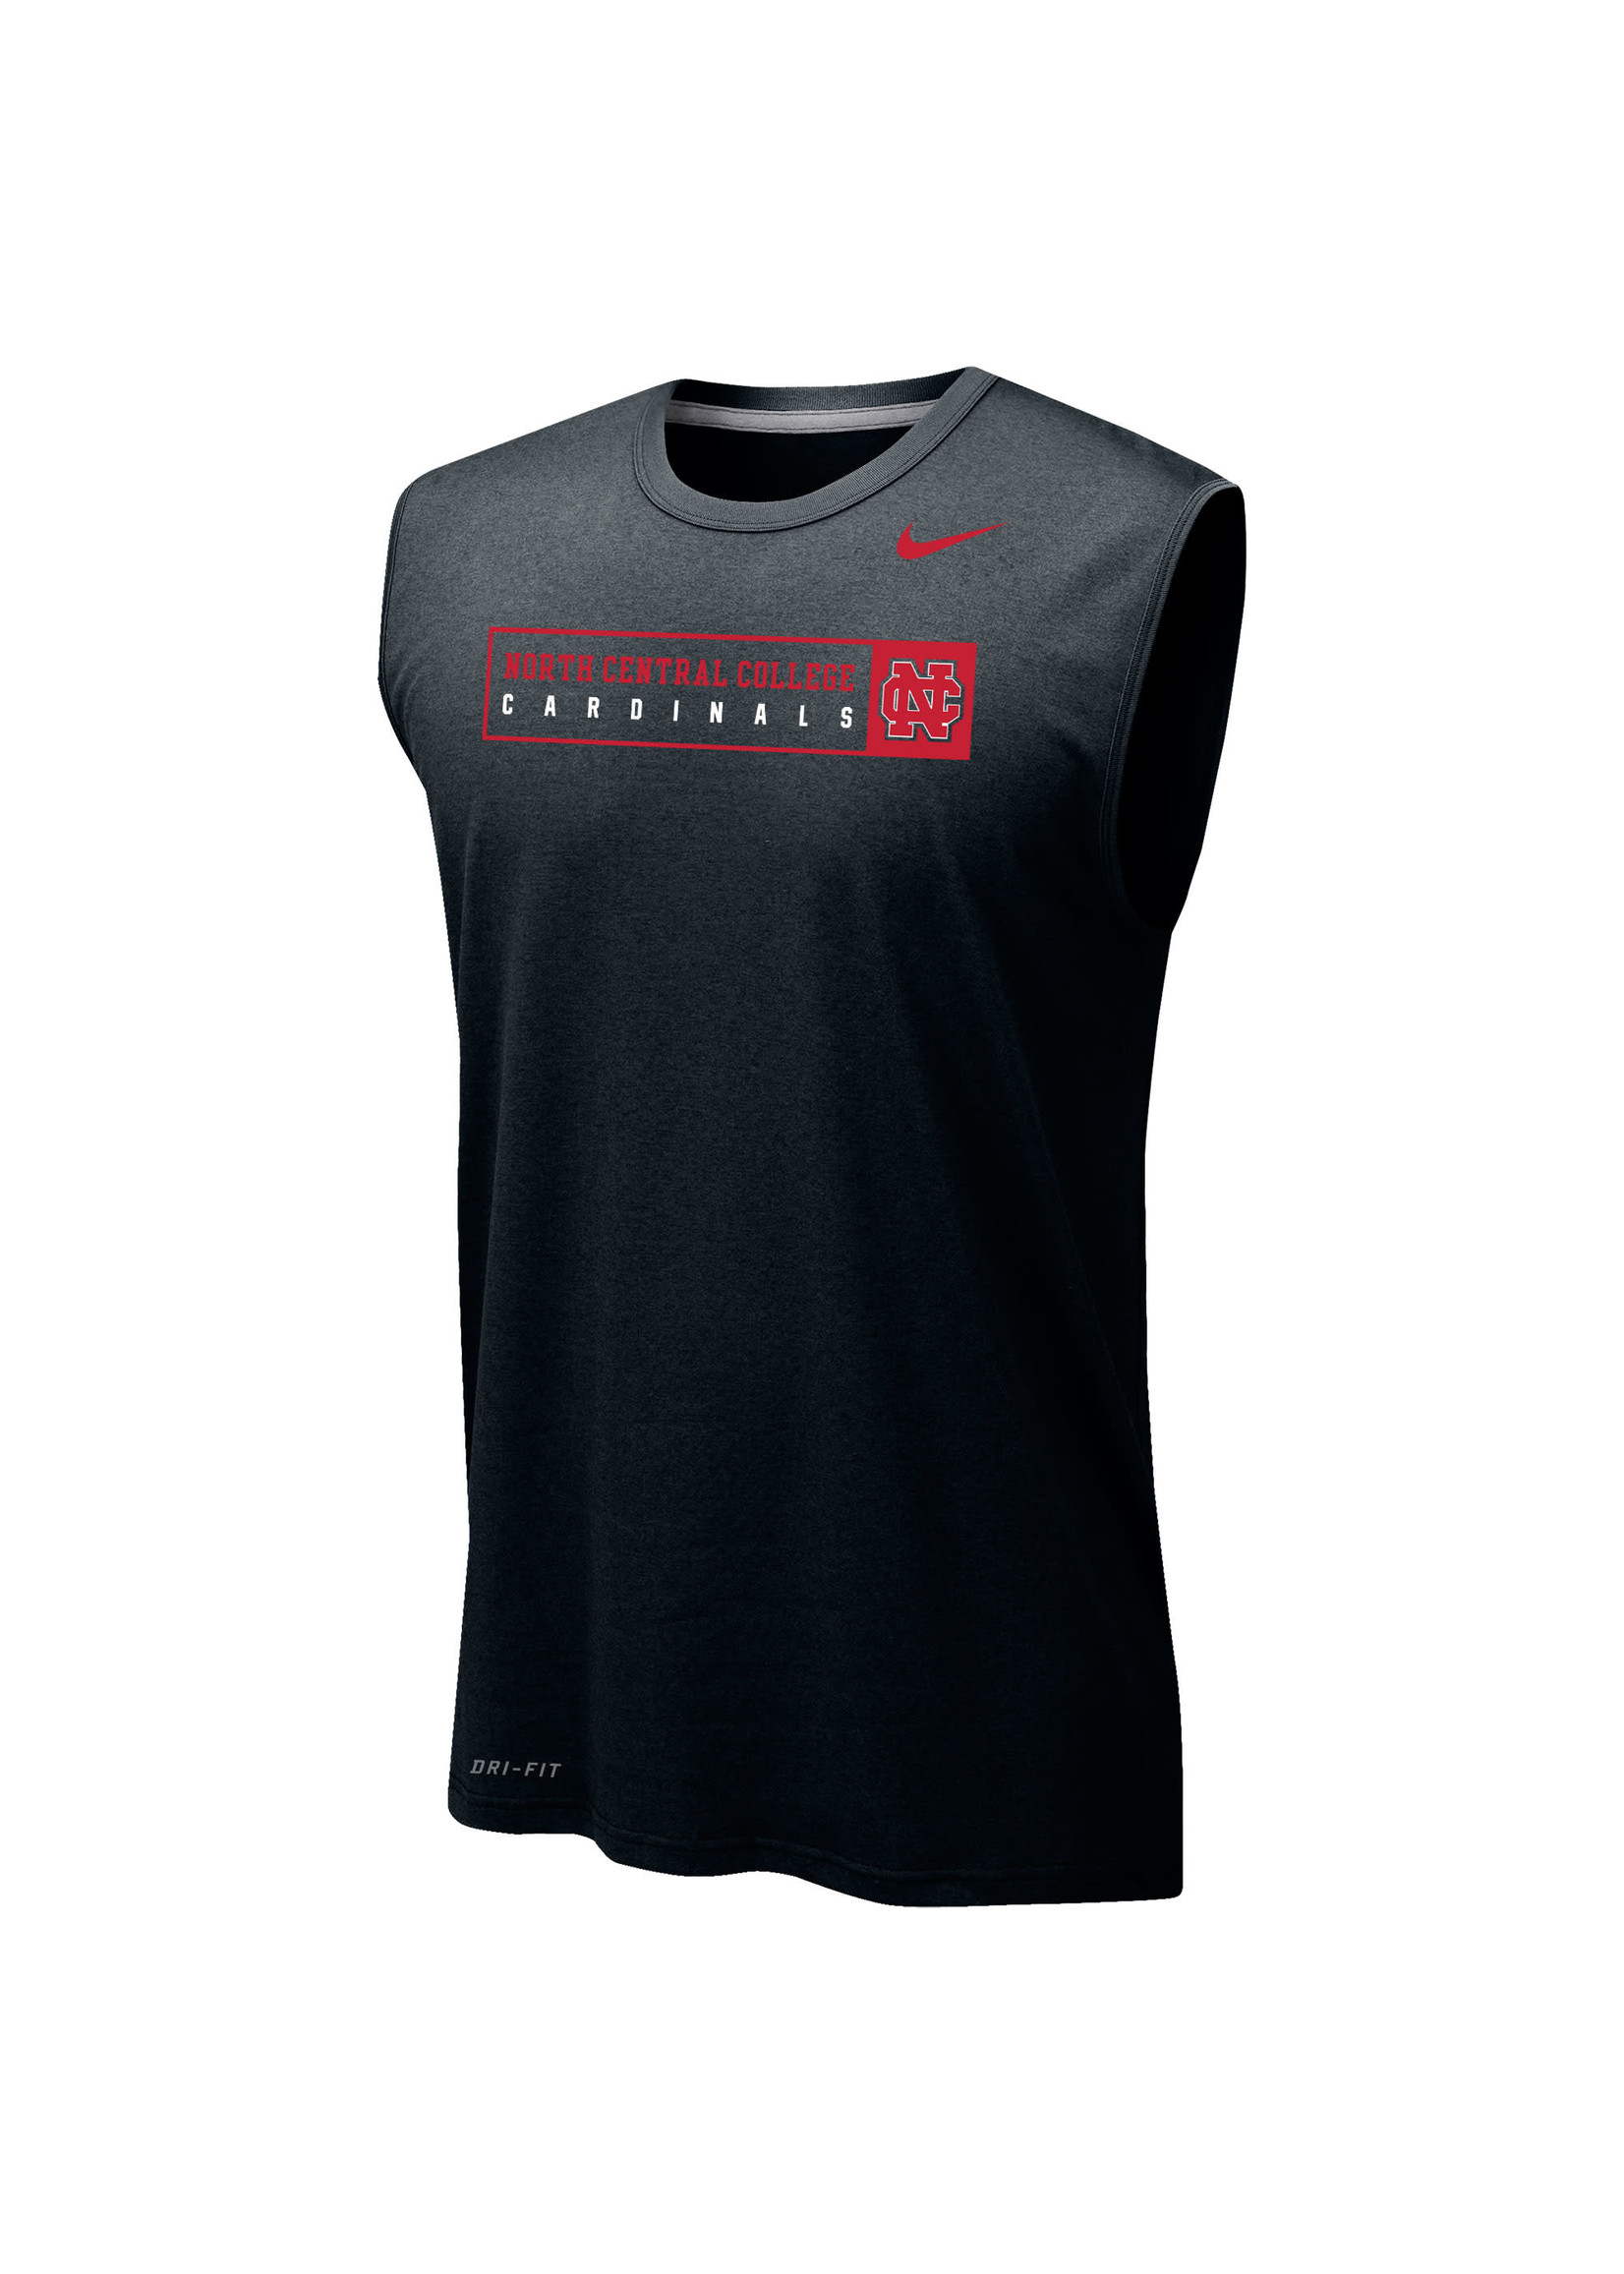 Nike Dri-FIT Legend Men's Sleeveless T-Shirt - DX0991 - FREE SHIPPING